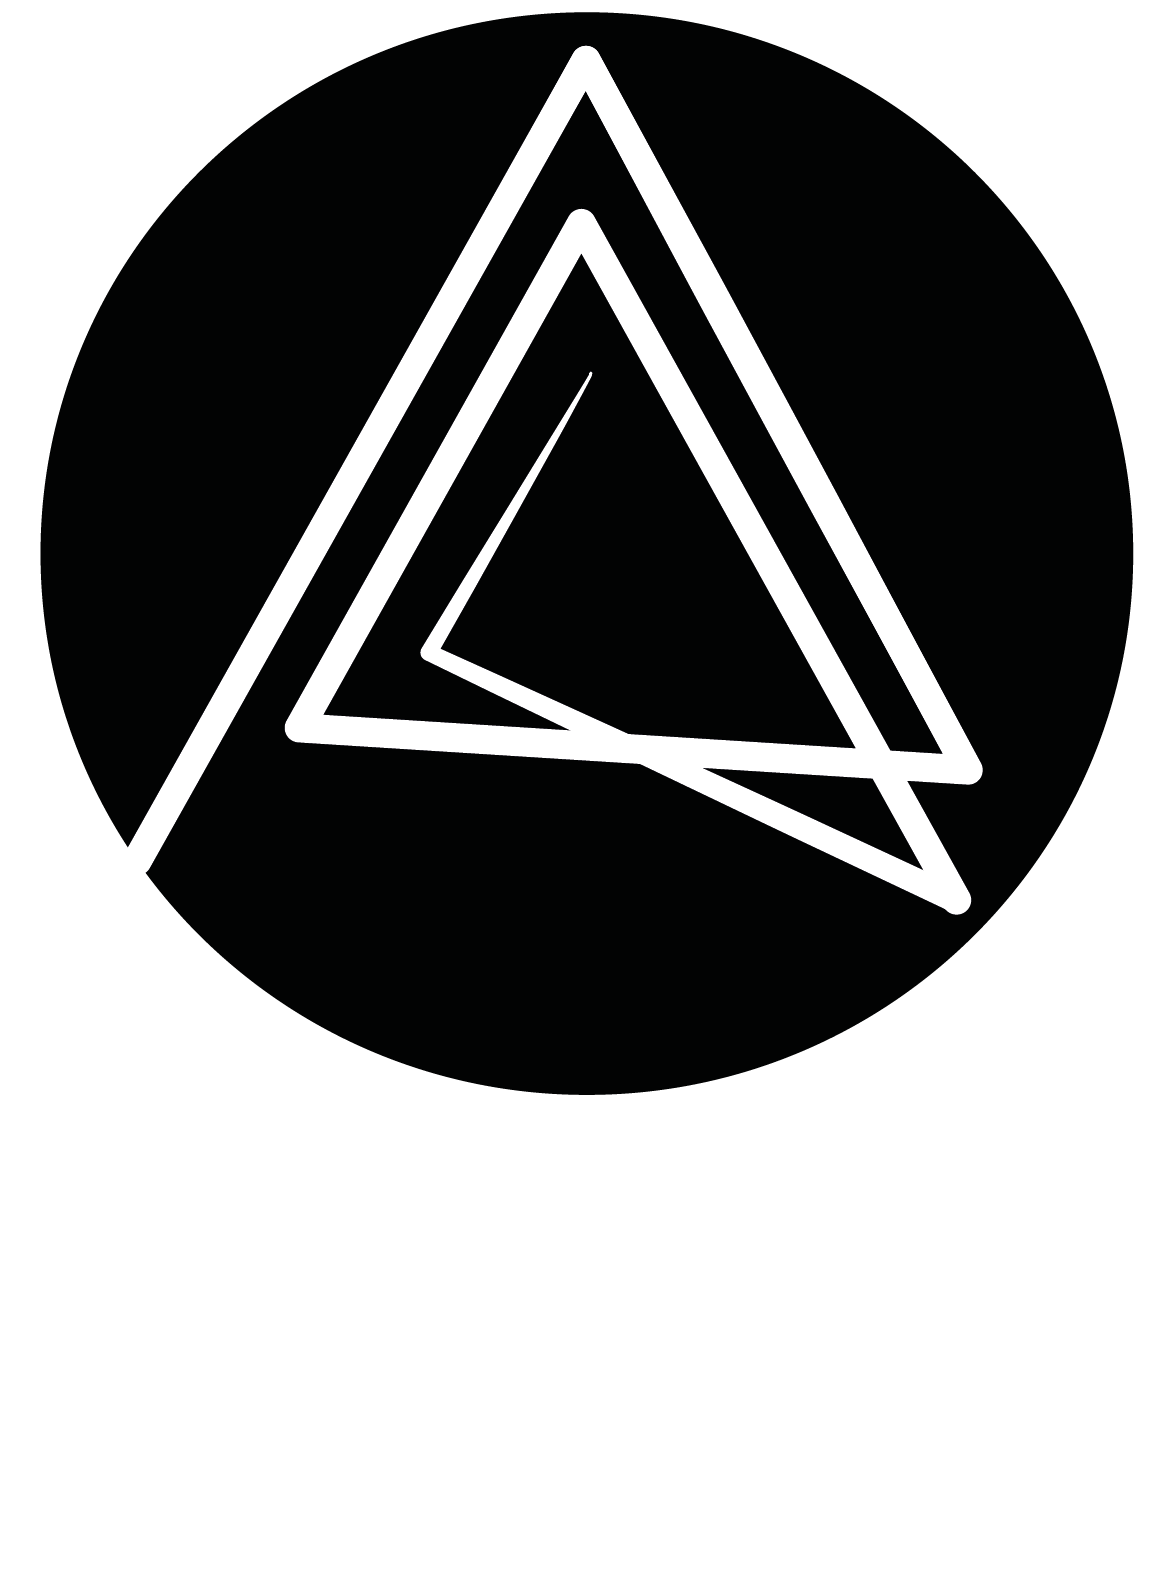 Arpio Architects